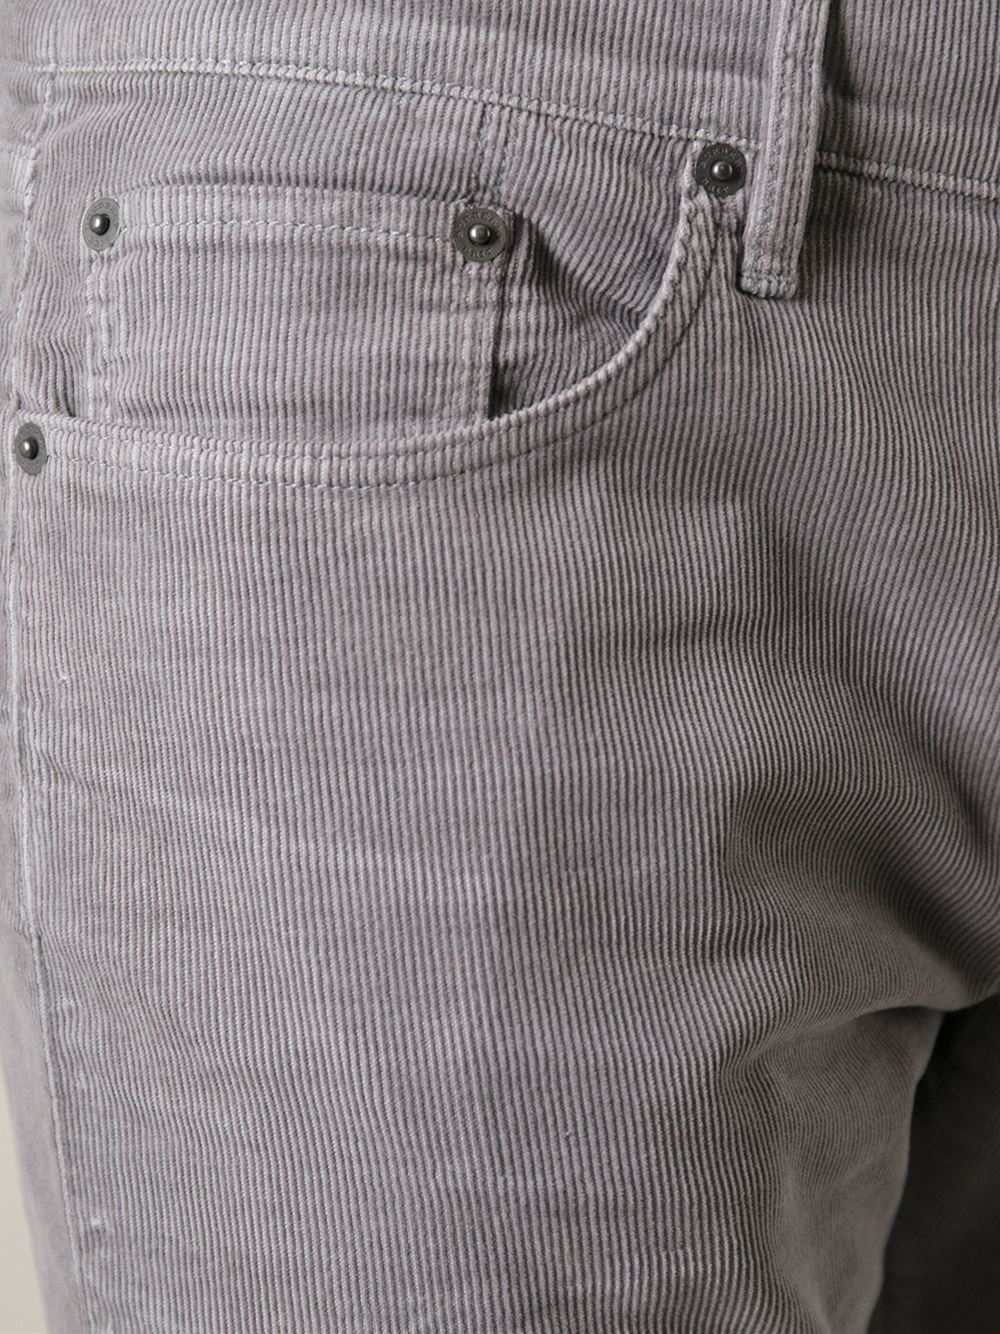 grey corduroy pants mens